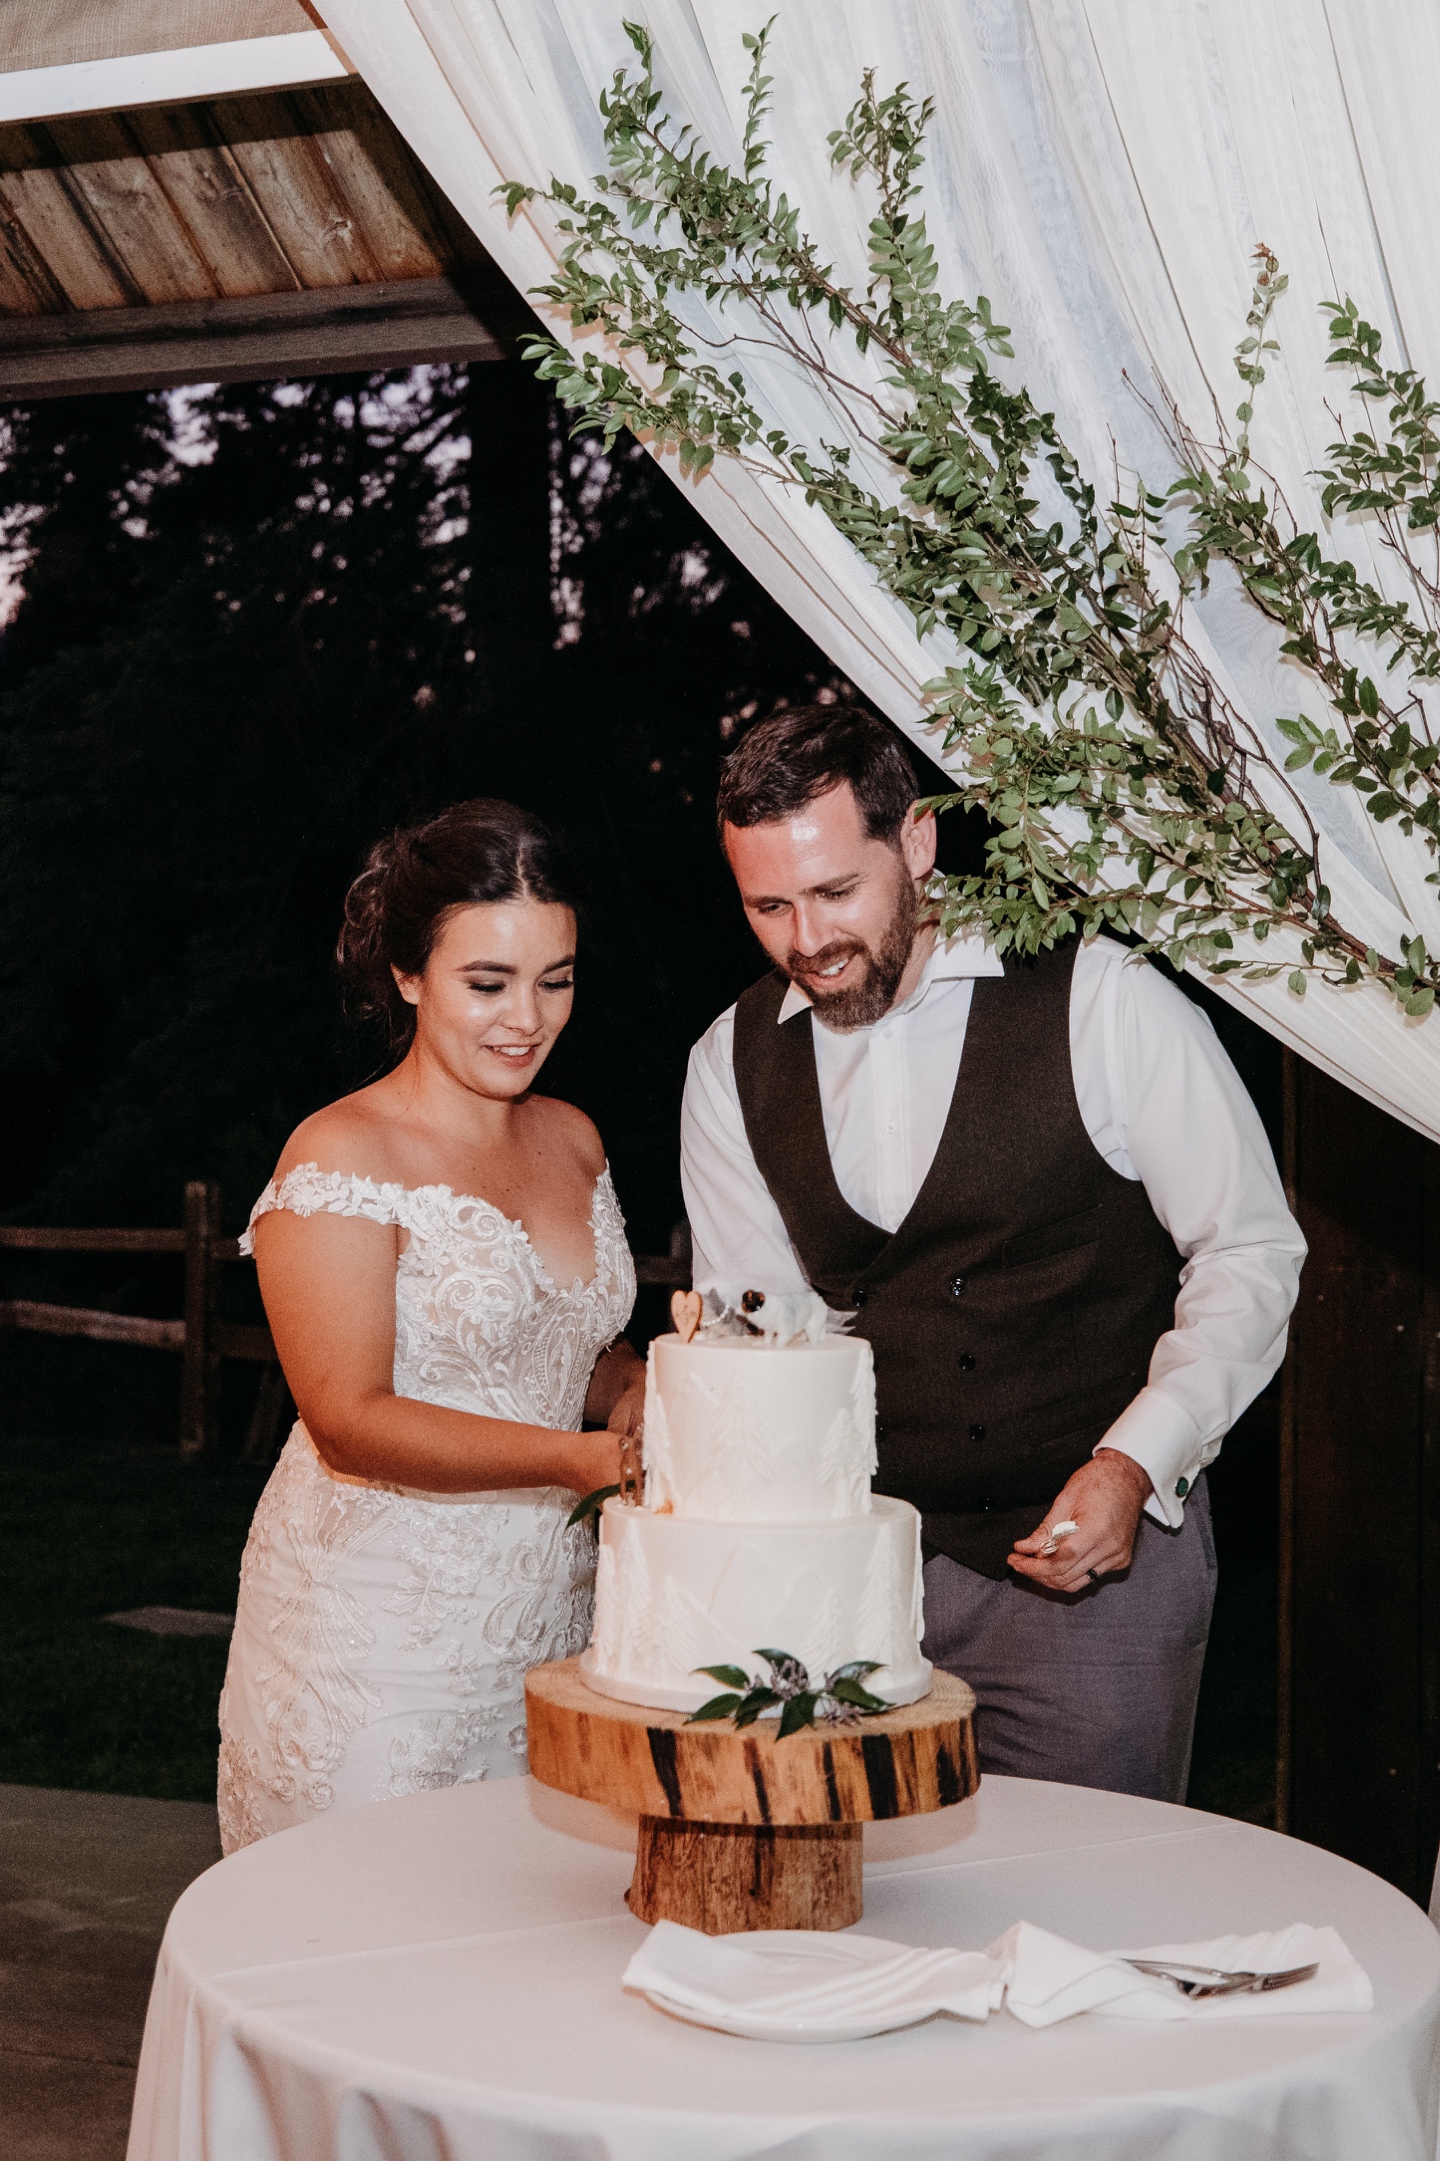 Bride and groom cut their cake at their Yosemite wedding reception at Tenaya Lodge